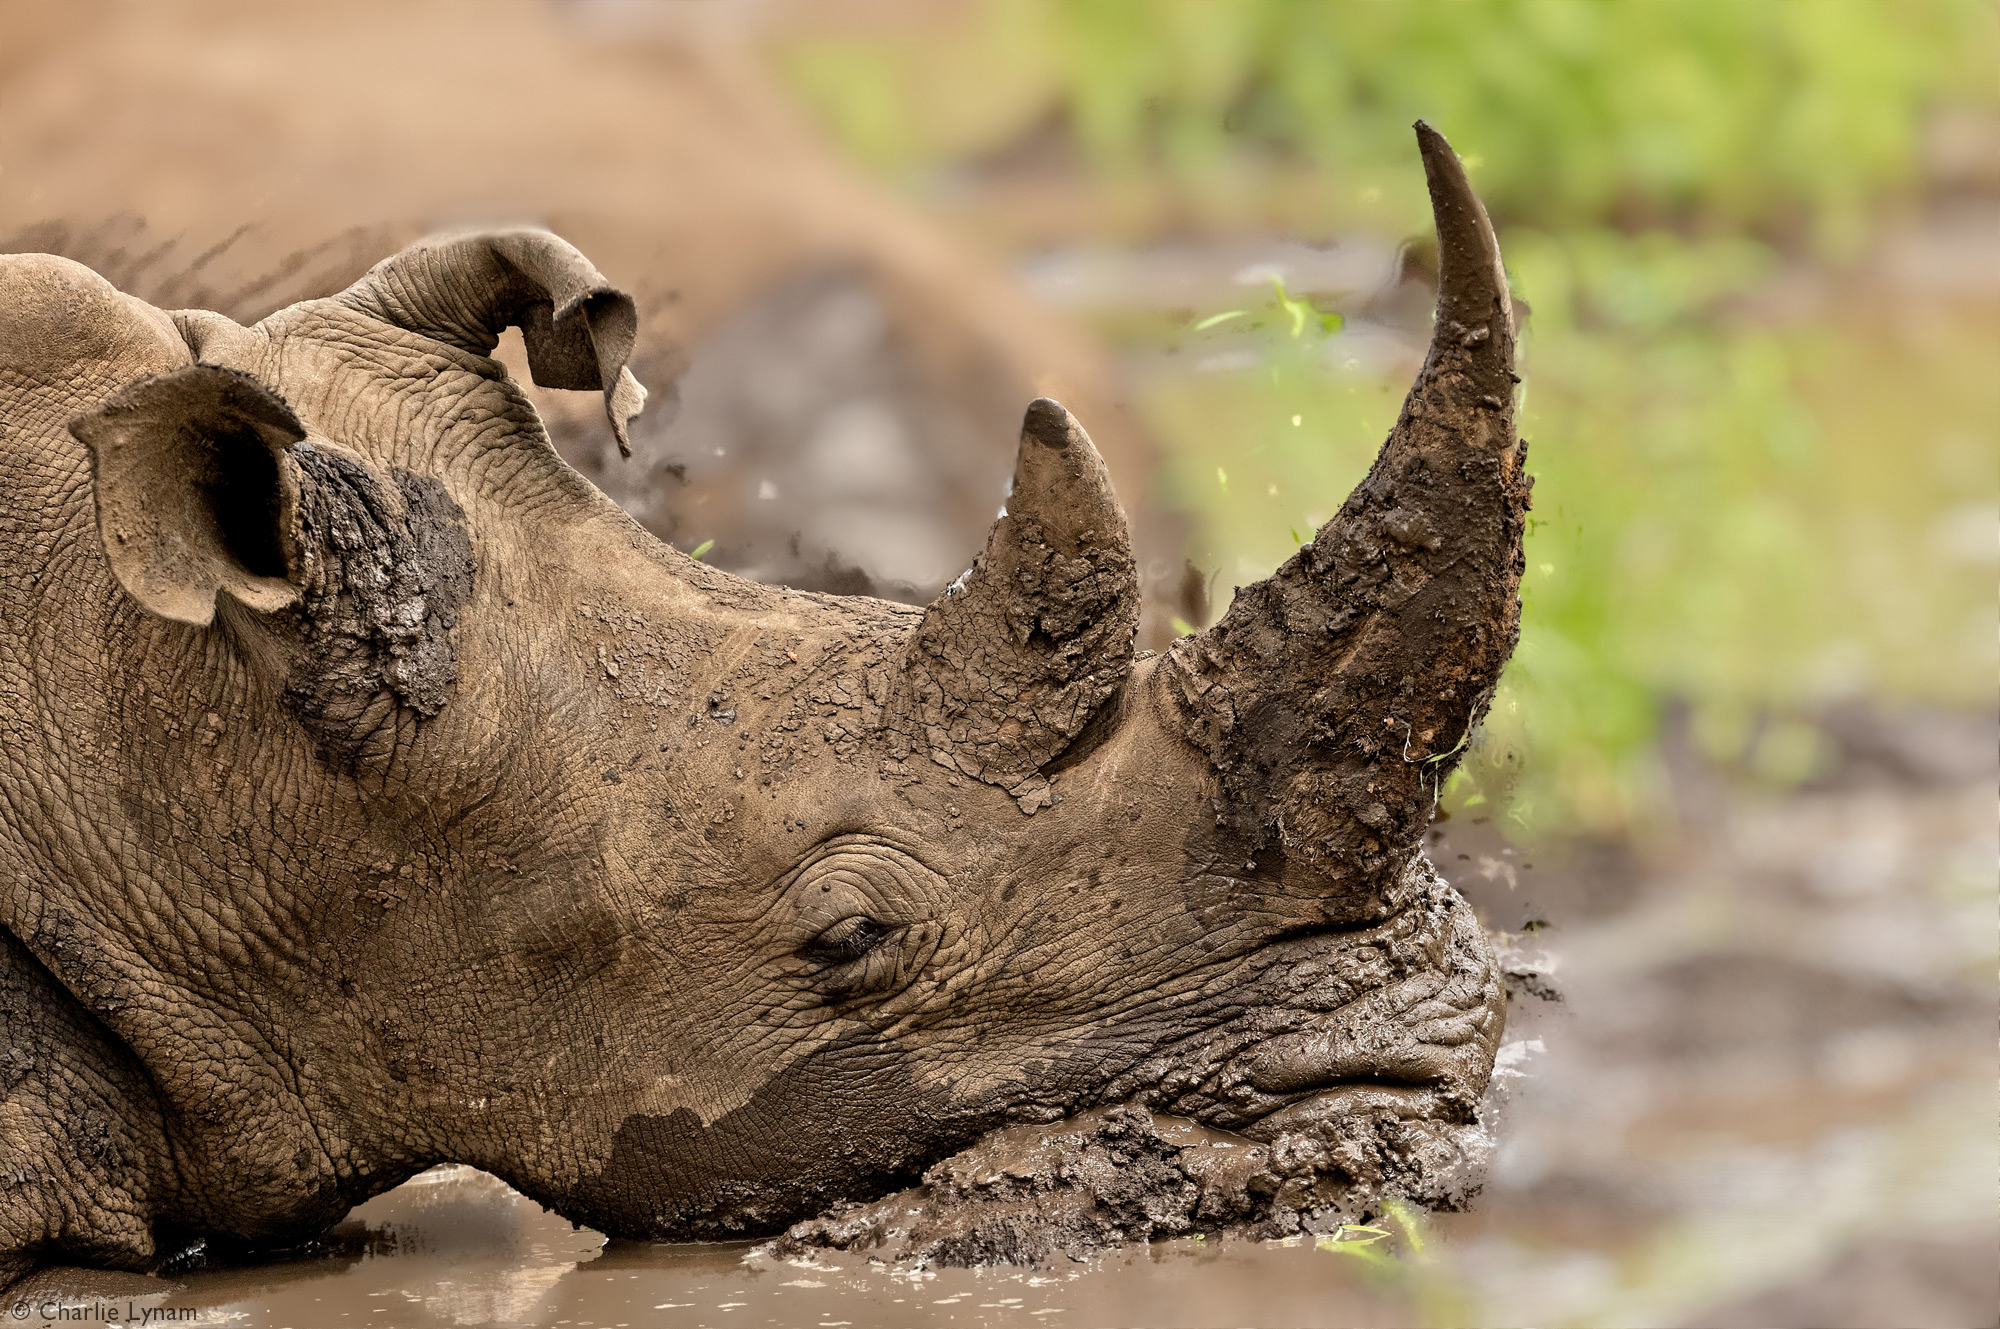 White rhino resting in the mud